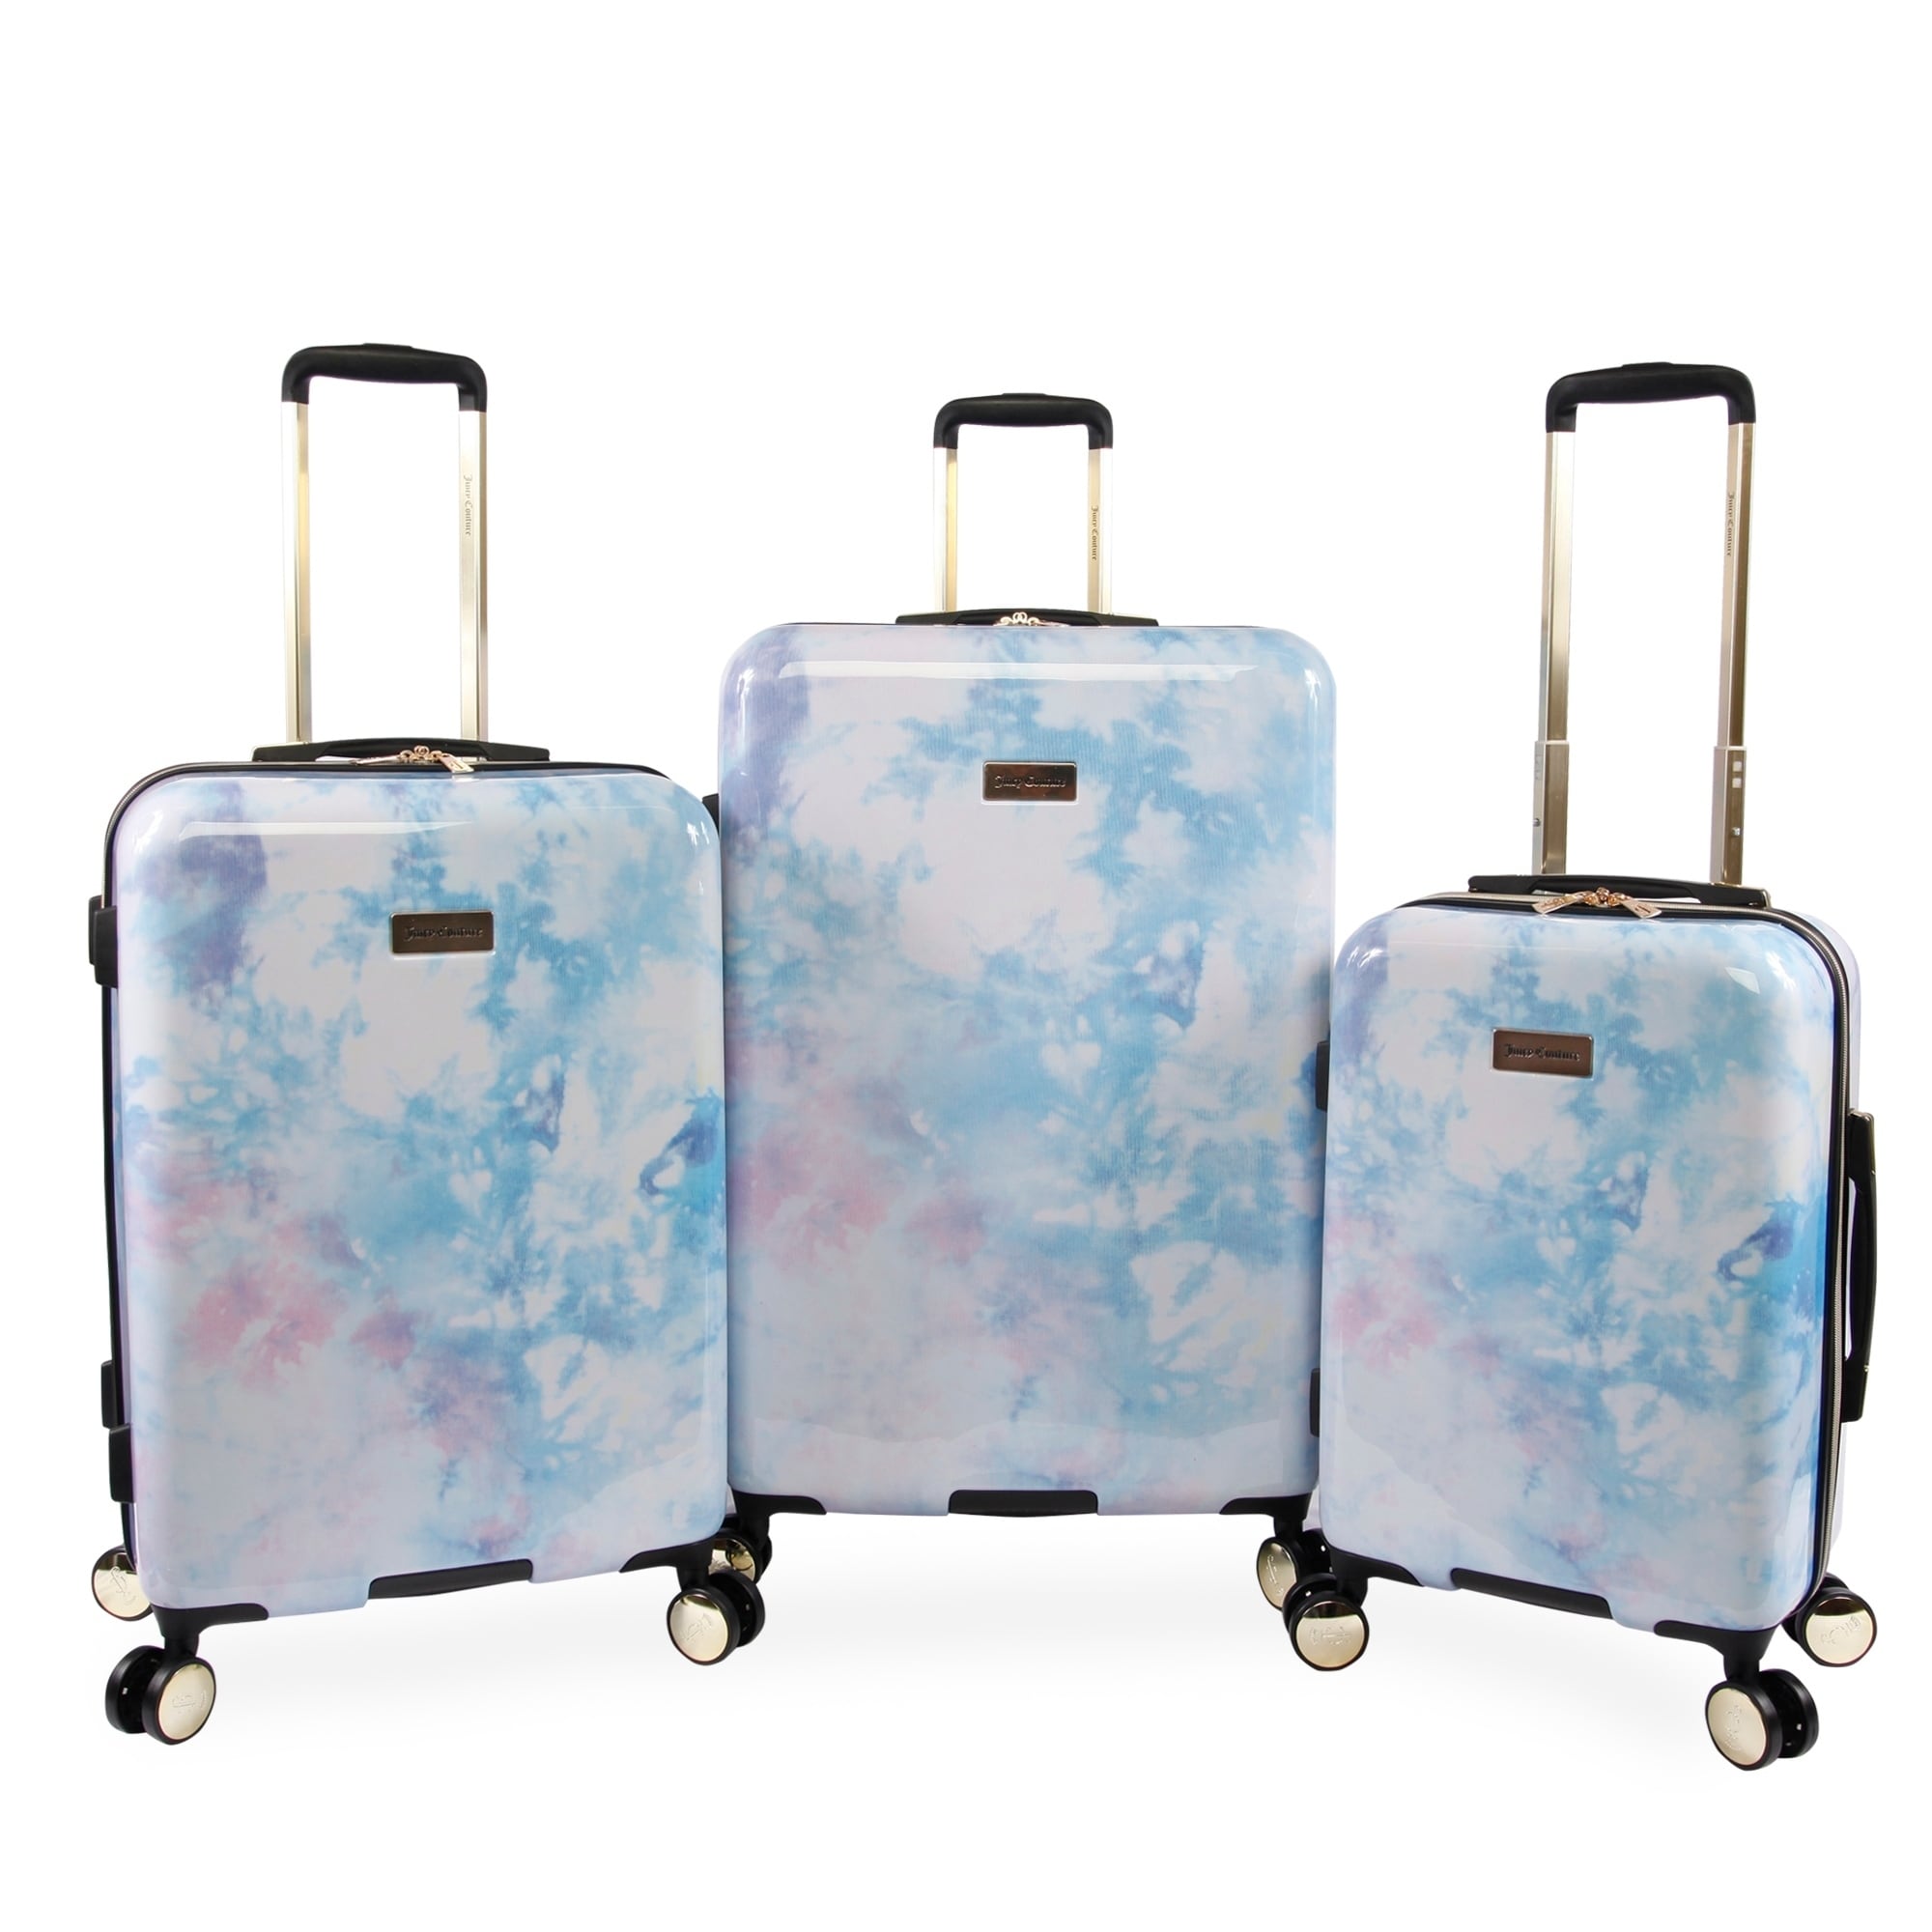 spinner luggage sets under $100